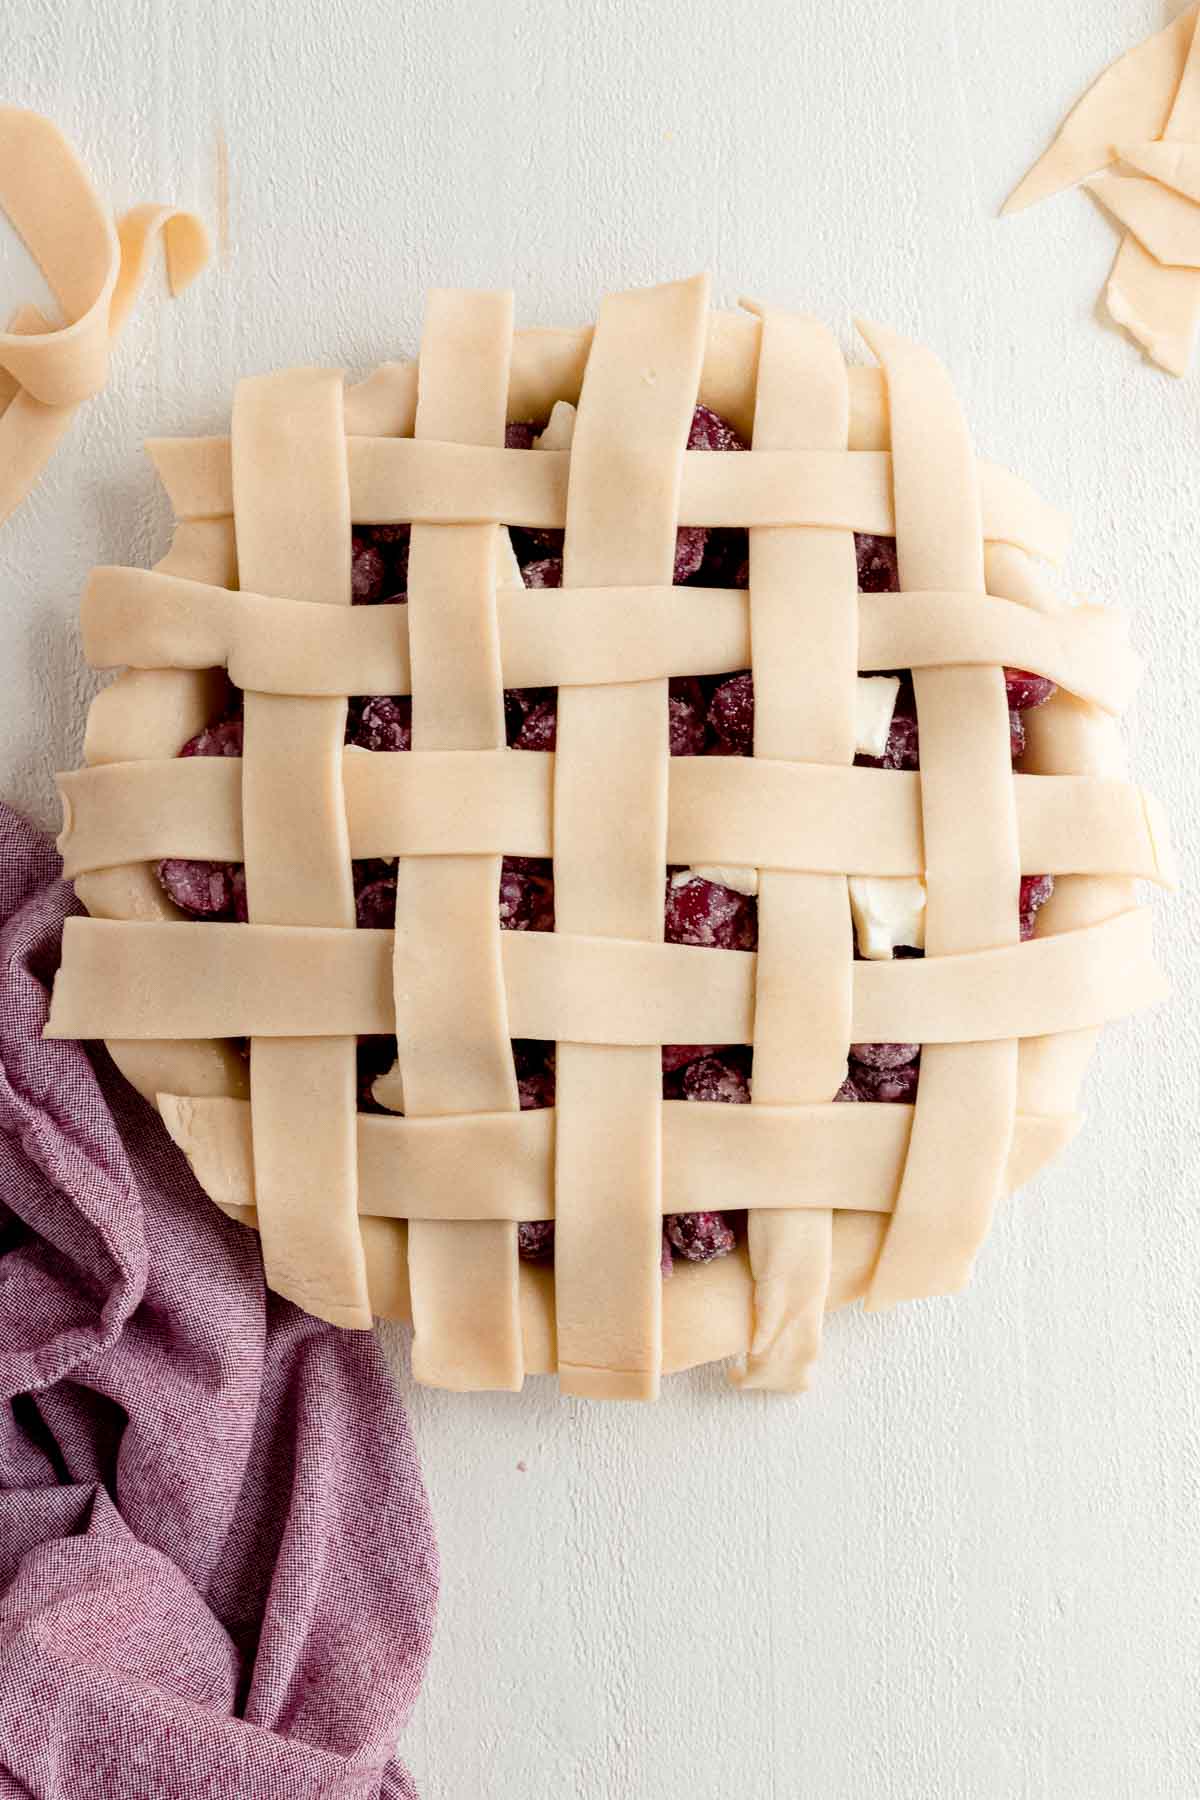 Cherry Pie with lattice crust before baking